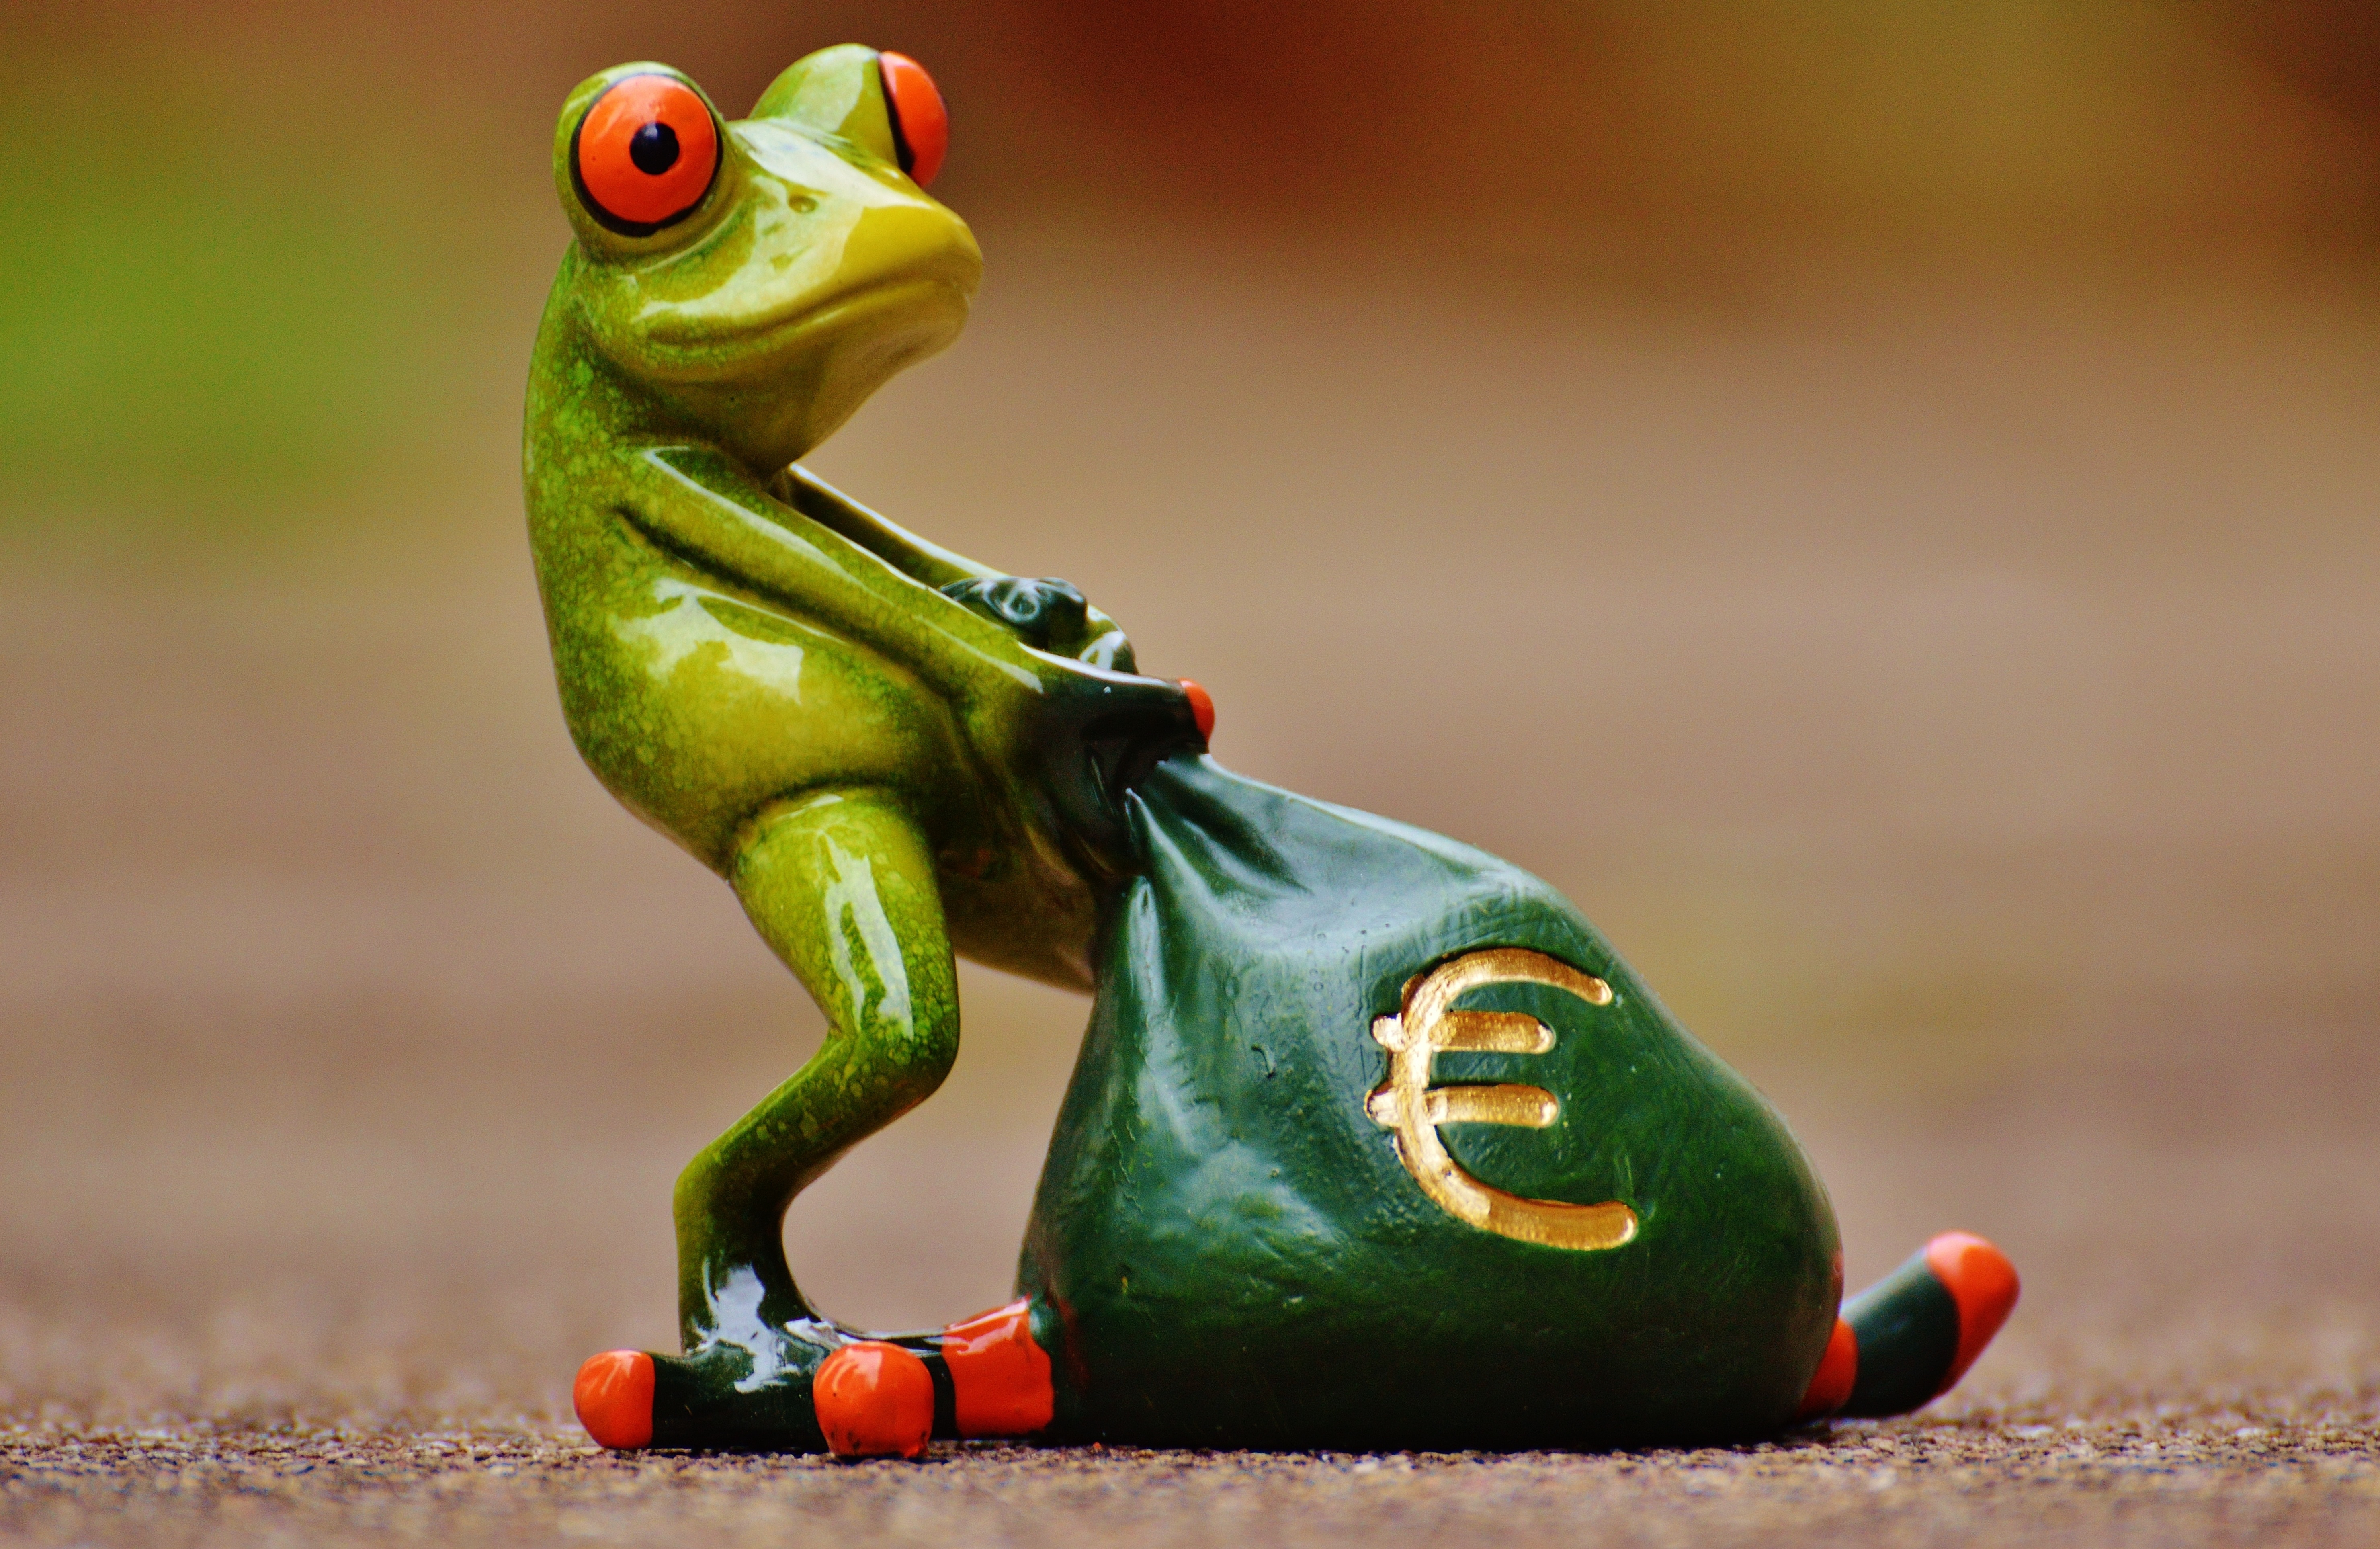 Frog, Funny, Bag, Money, Euro, Money Bag, one animal, green color